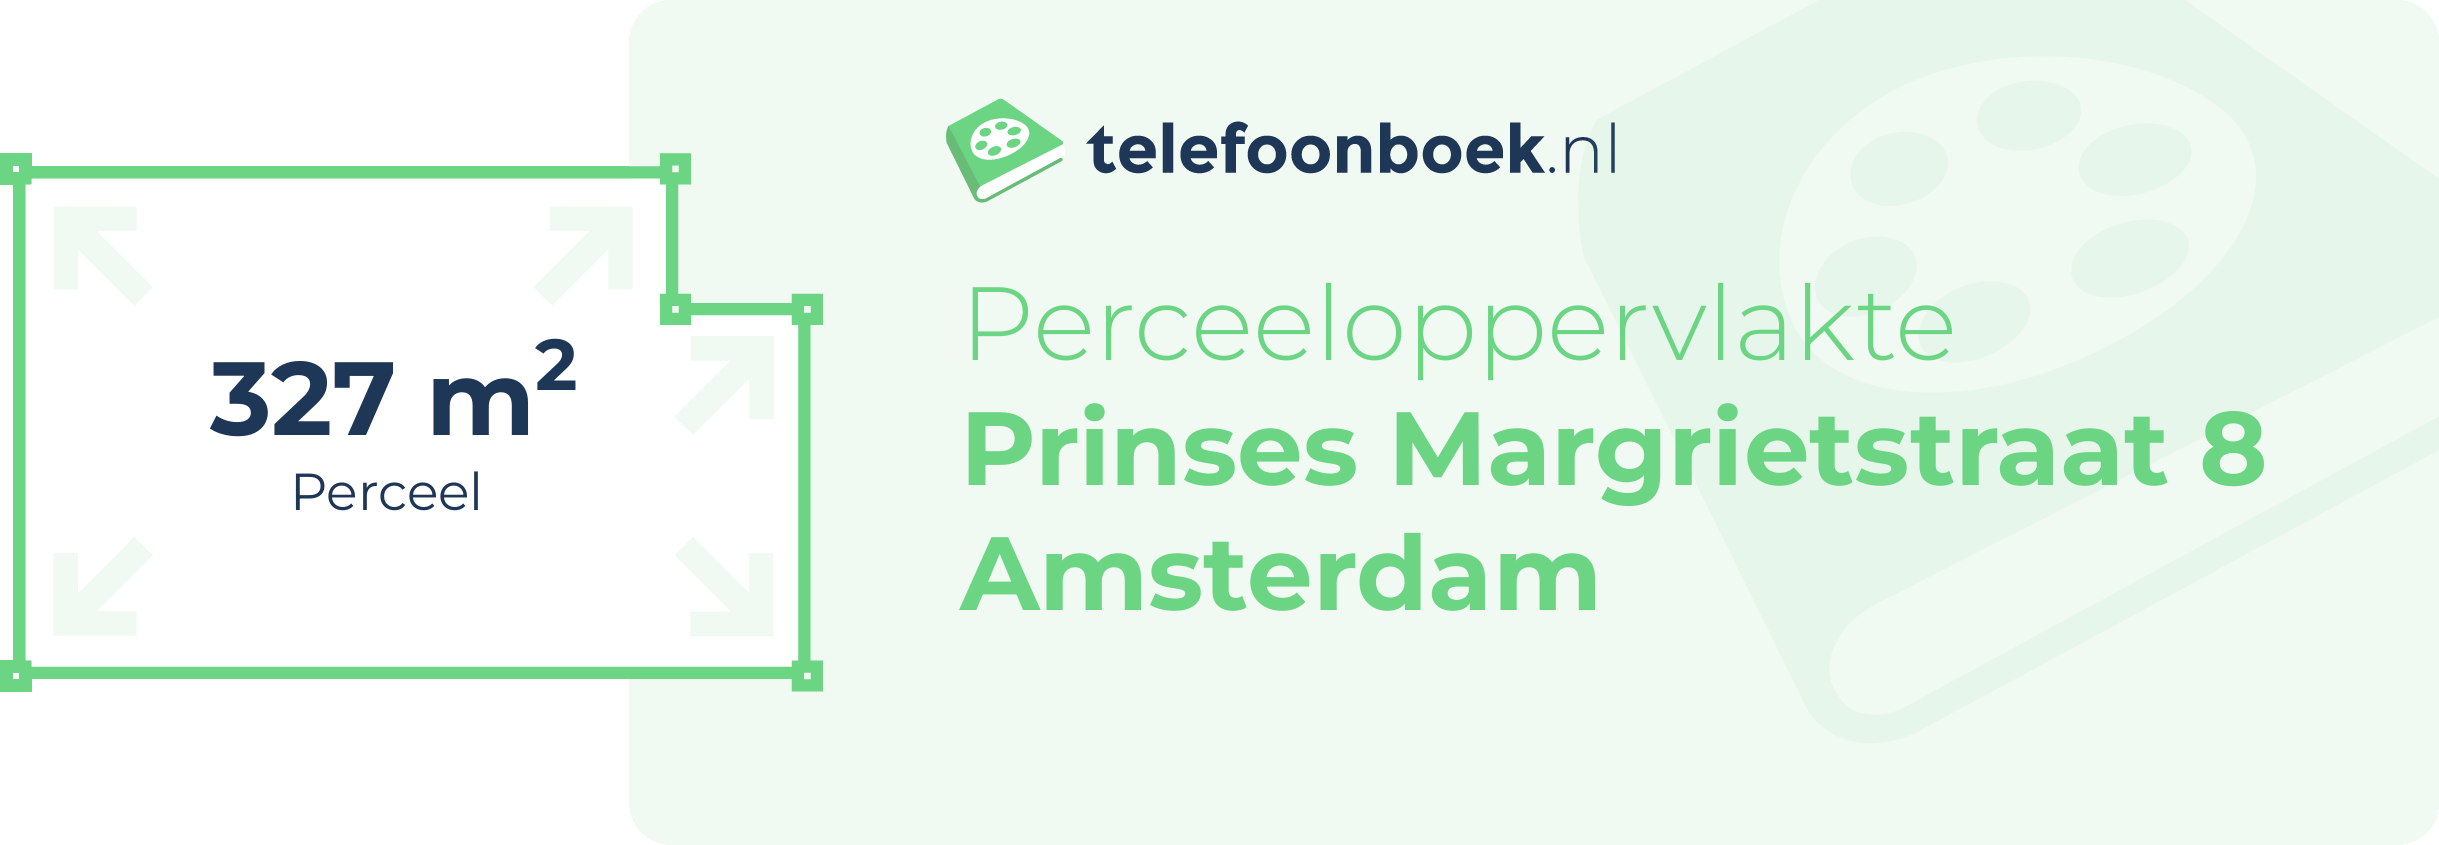 Perceeloppervlakte Prinses Margrietstraat 8 Amsterdam